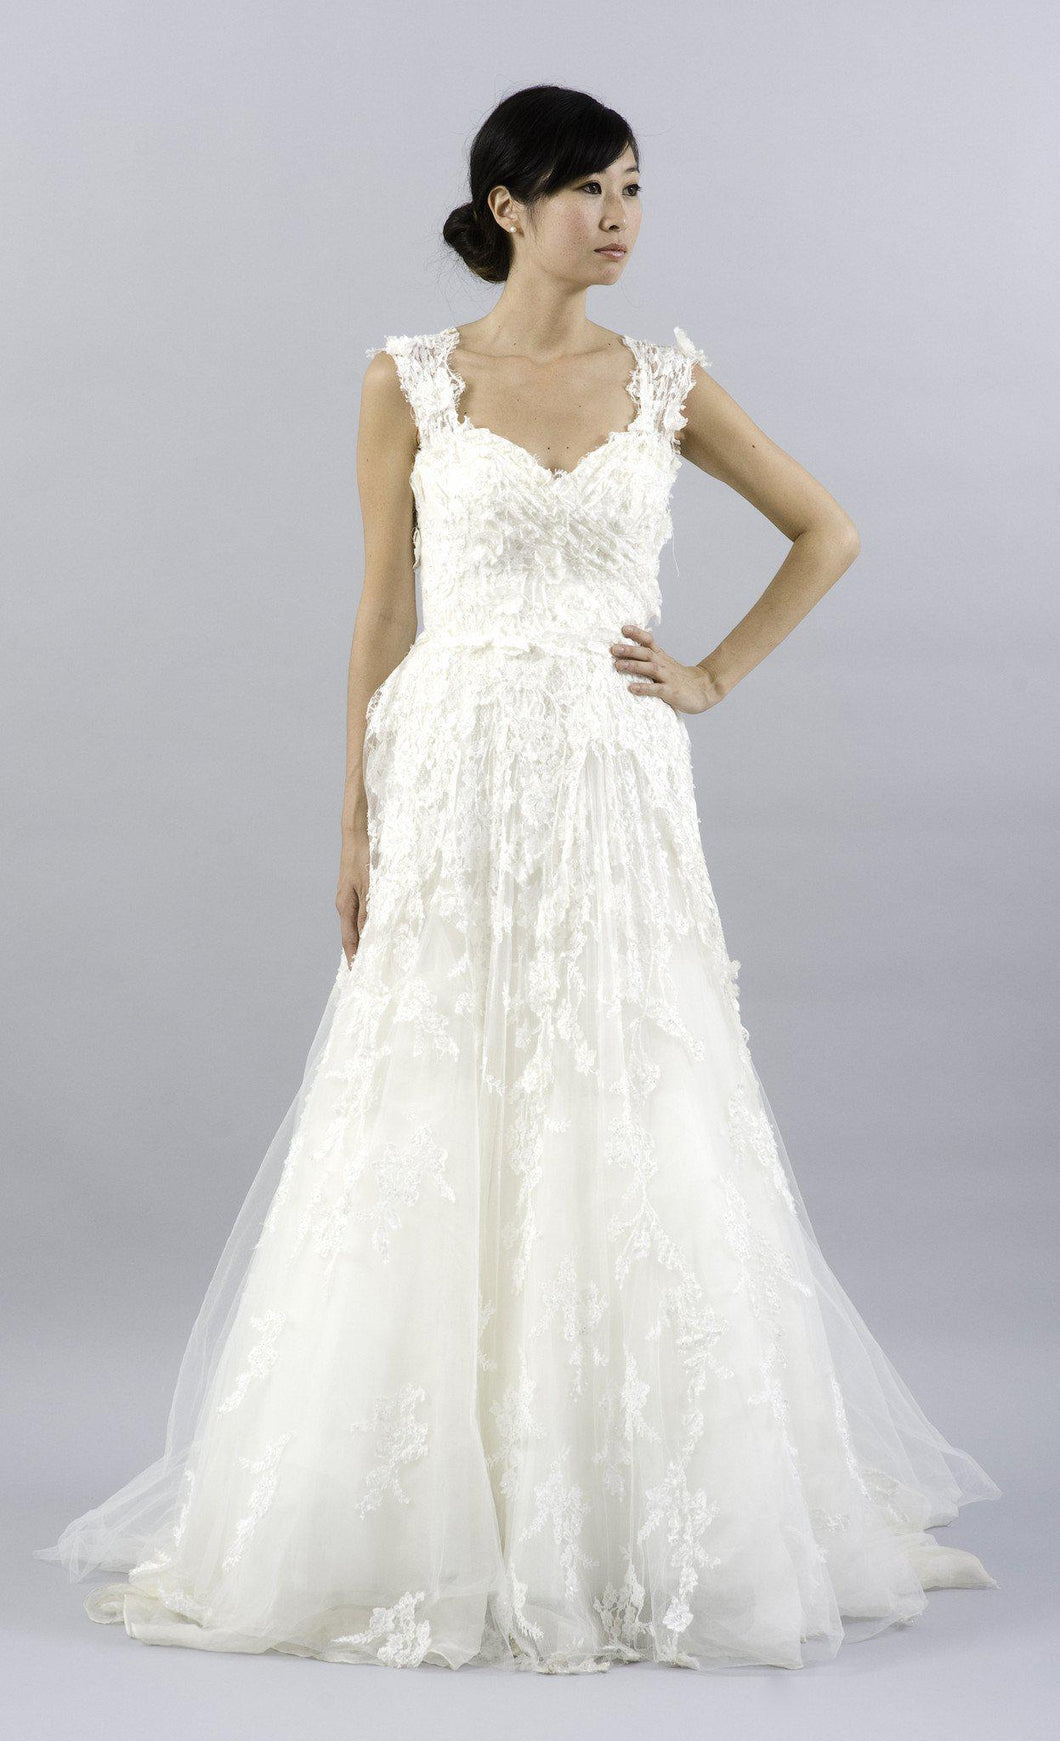 Elie Saab Caelum Lace and Tulle Wedding Dress - Elie Saab - Nearly Newlywed Bridal Boutique - 1